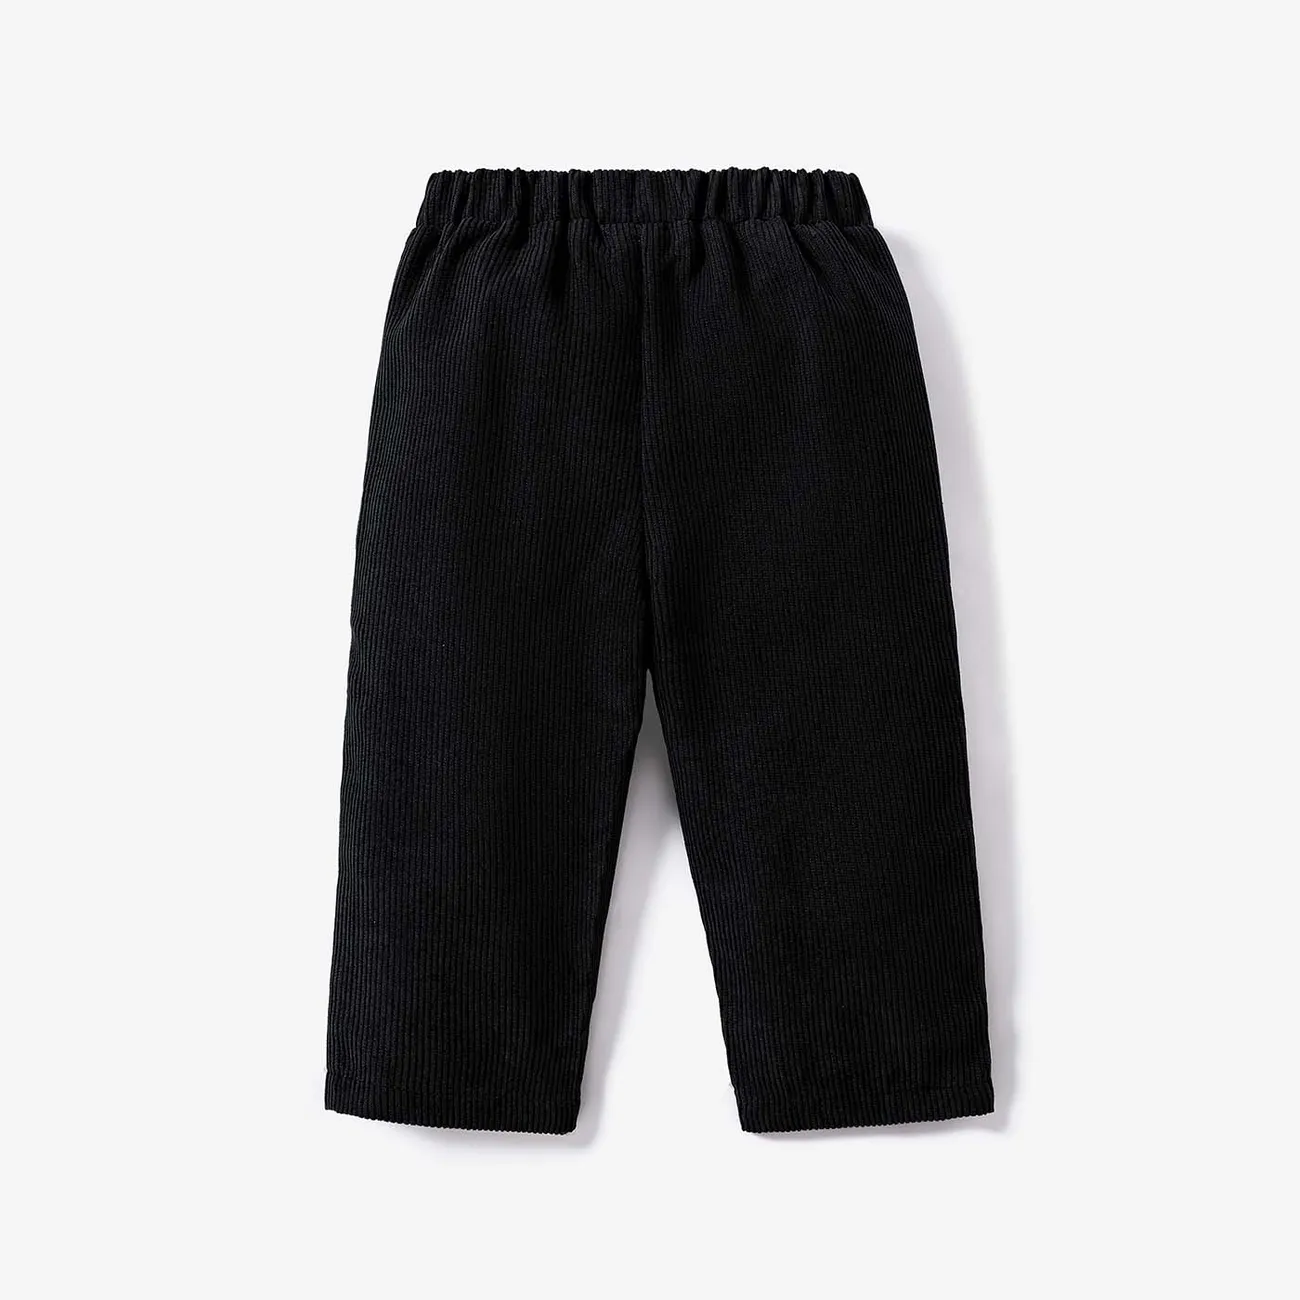 pantalones rectos de pana lisa para bebé niño Negro big image 1